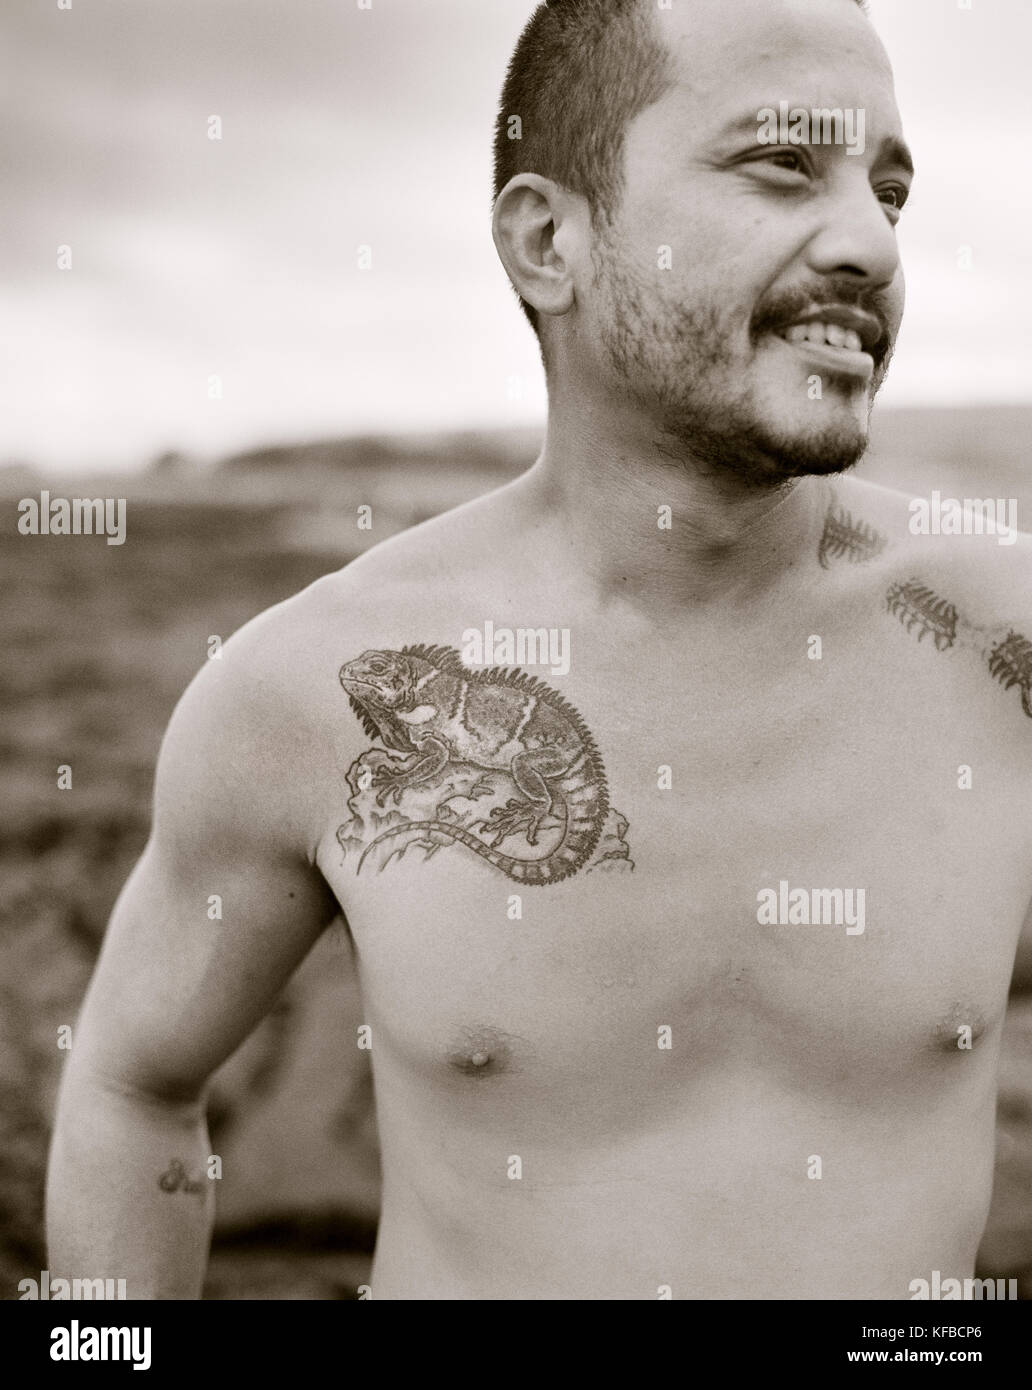 USA, Hawaii, The Big Island, smiling fisherman with a tattoo on chest at Puna Lu'u Beach (B&W) Stock Photo